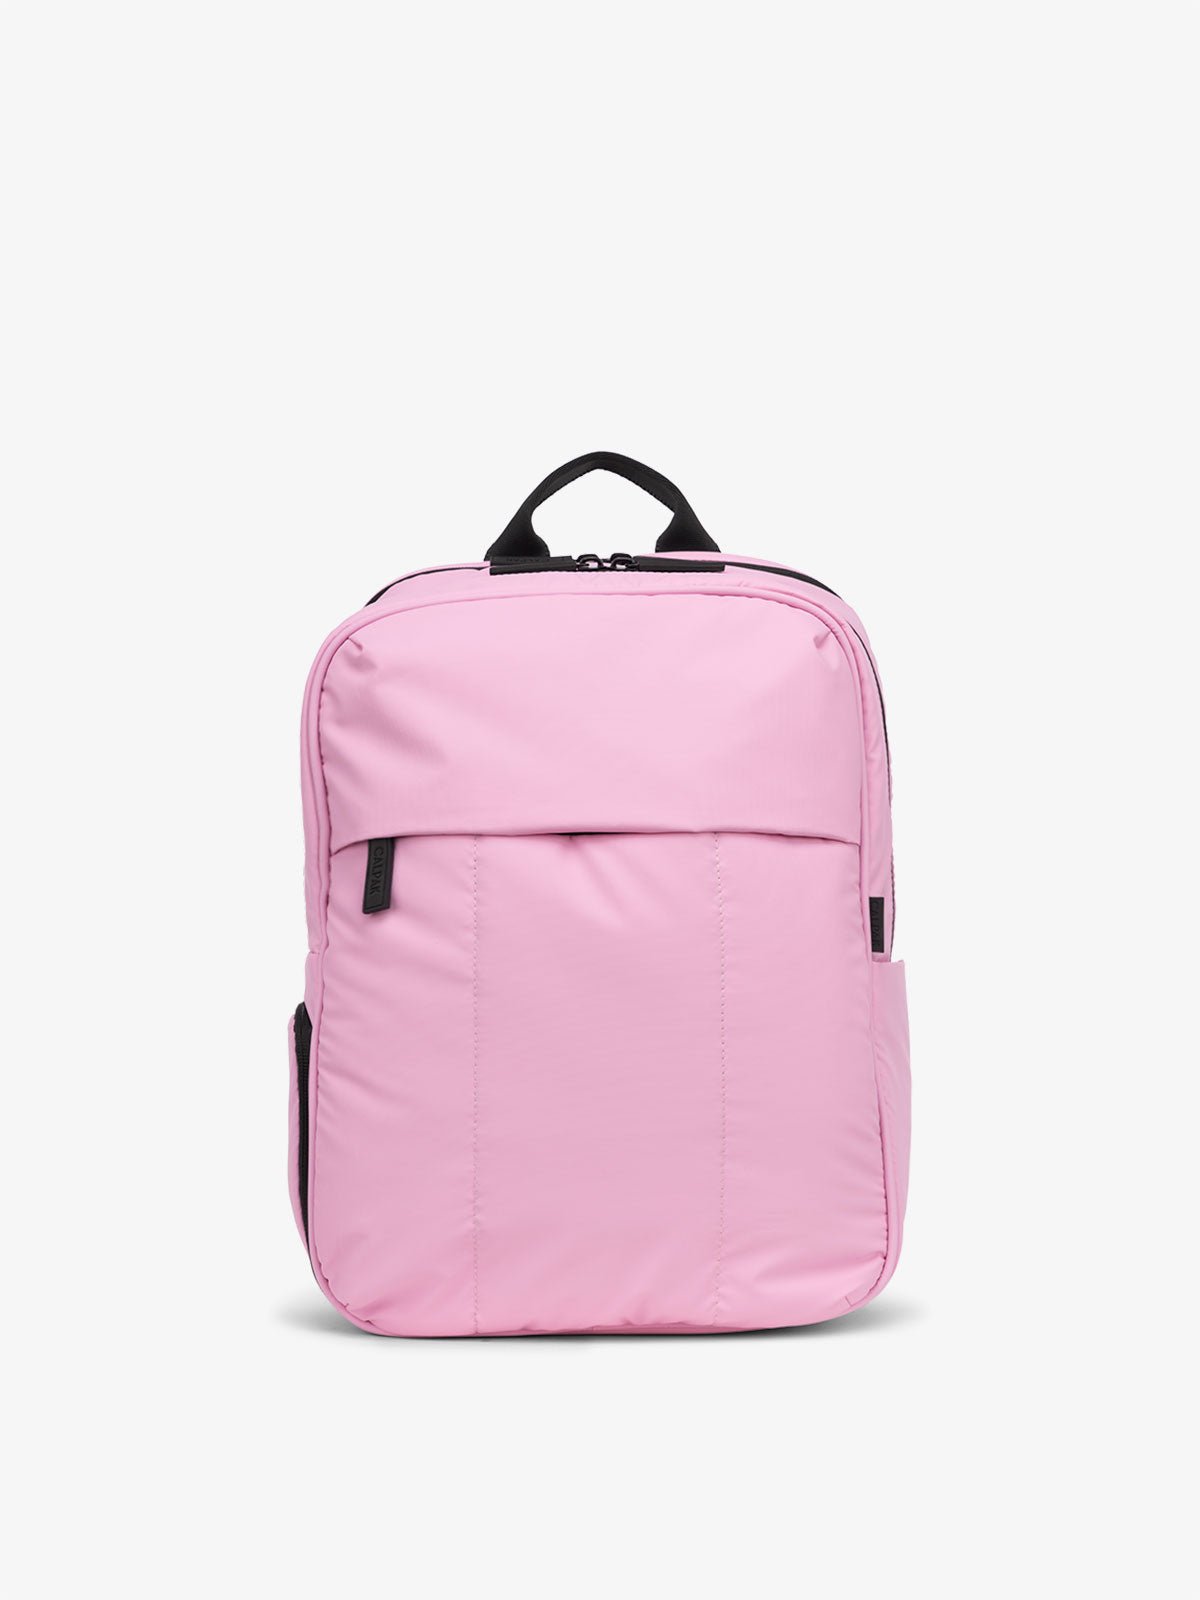 CALPAK Luka Laptop Backpack for women in pink